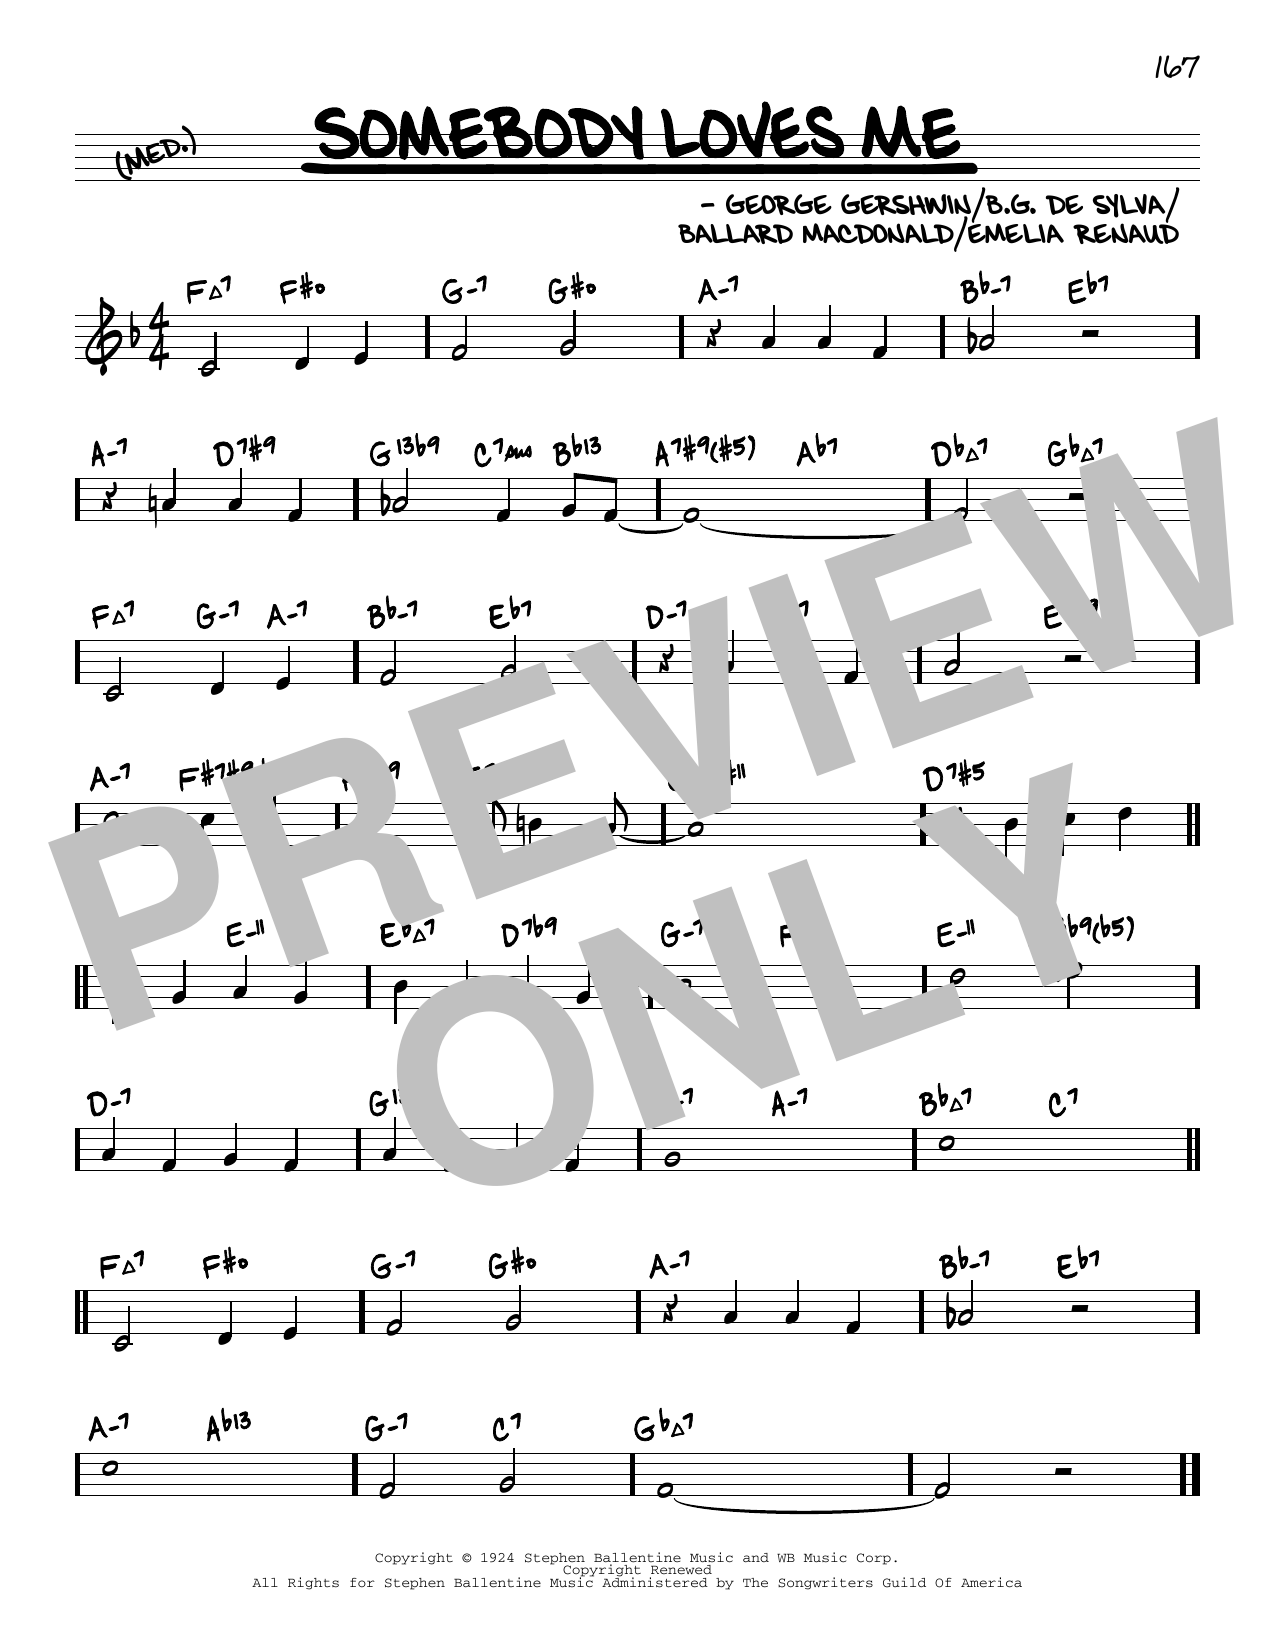 George Gershwin Somebody Loves Me (arr. David Hazeltine) Sheet Music Notes & Chords for Real Book – Enhanced Chords - Download or Print PDF